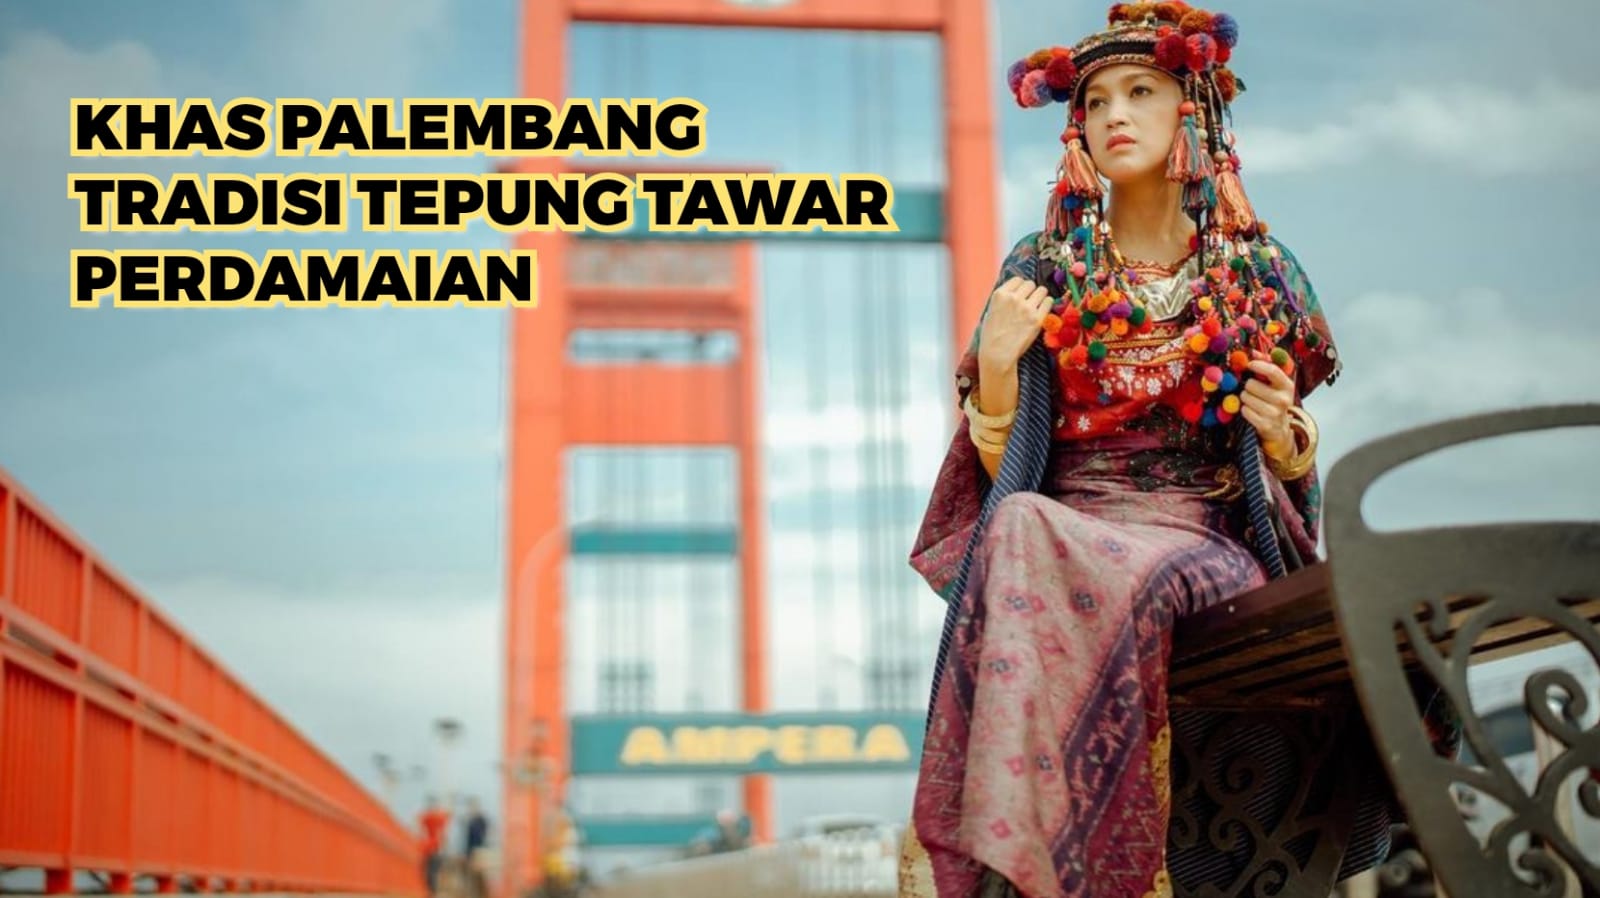 Khas Palembang: Mengenal Tradisi Tepung Tawar Cara Adat Perdamaian Pertikaian di Palembang